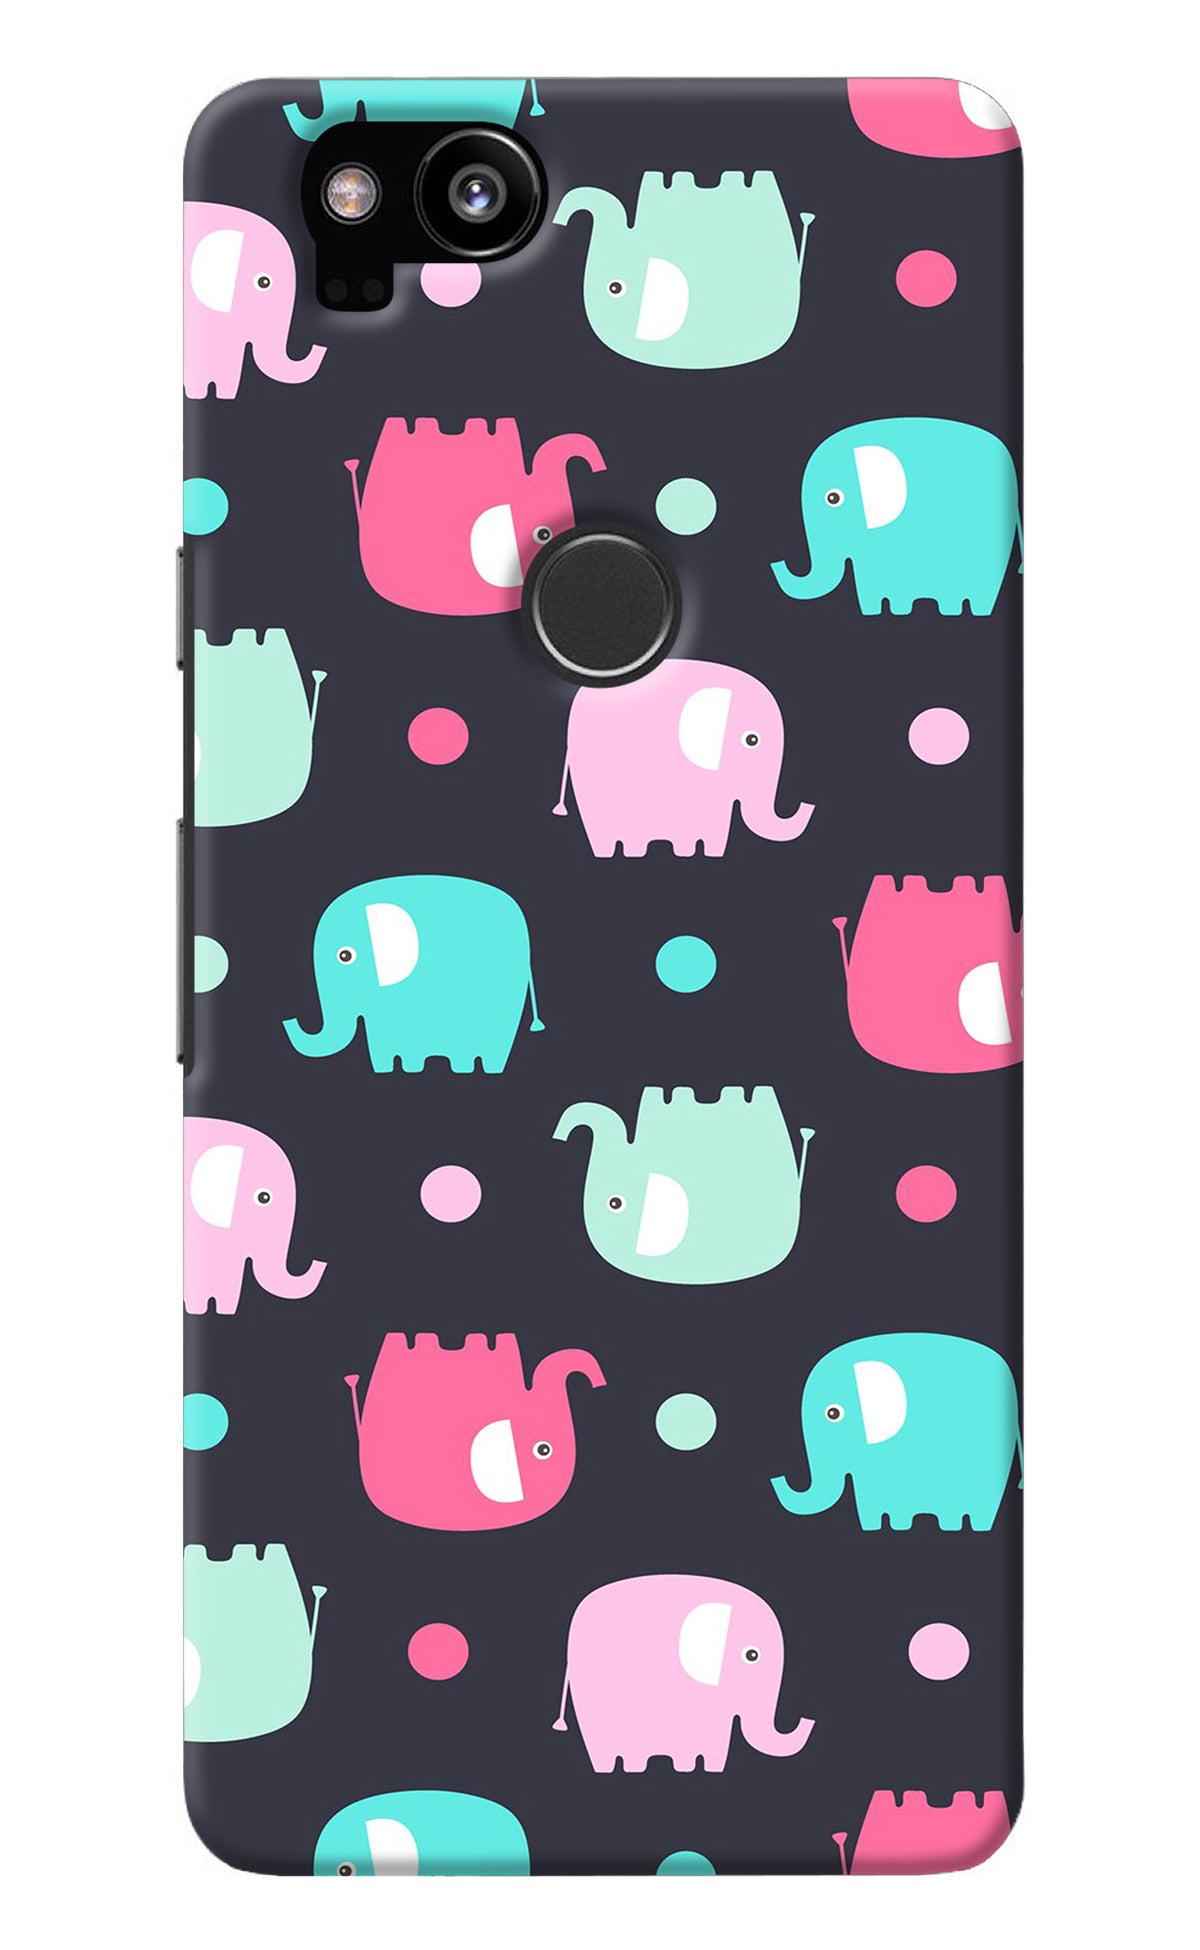 Elephants Google Pixel 2 Back Cover